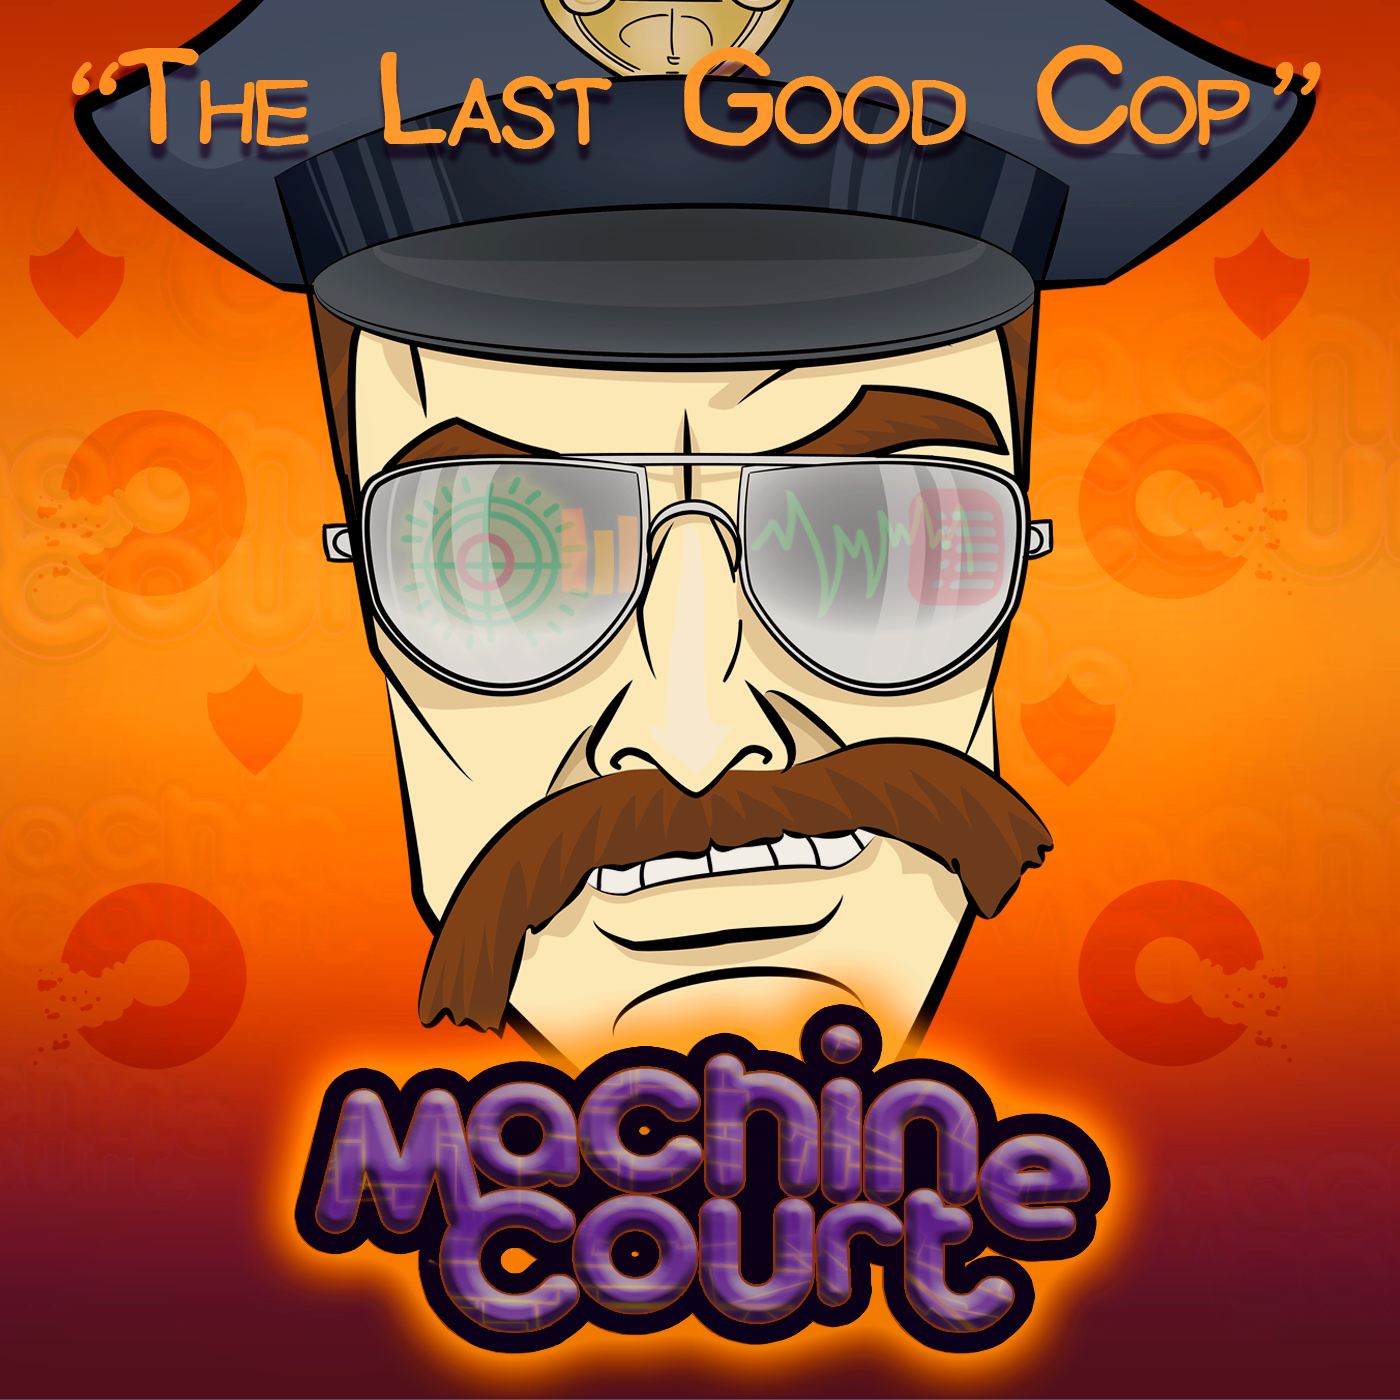 3.9 “The Last Good Cop”